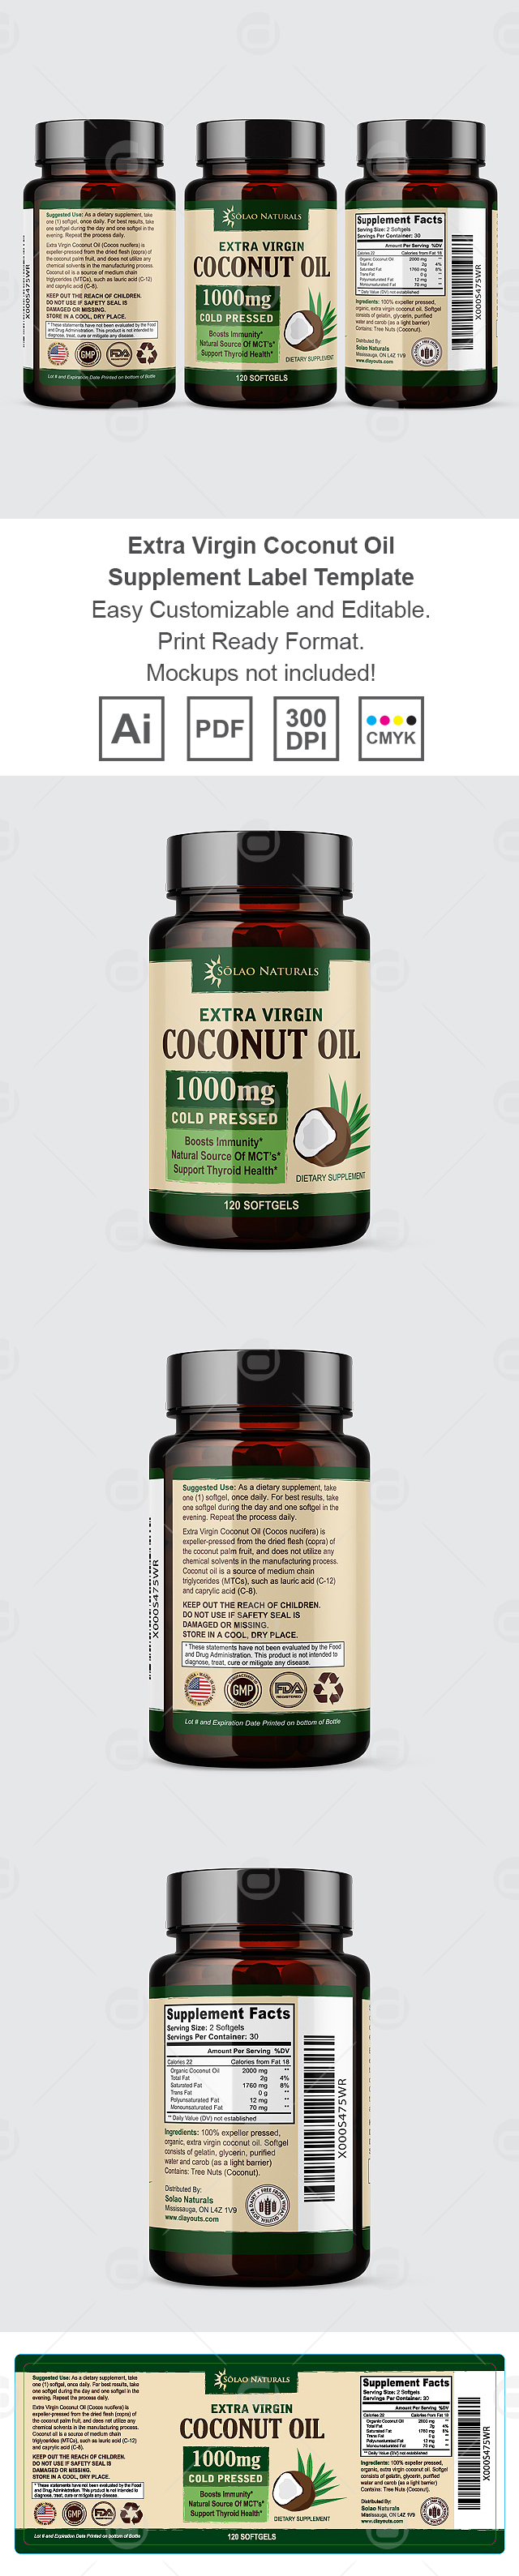 Virgin Coconut Oil Supplement Label Template